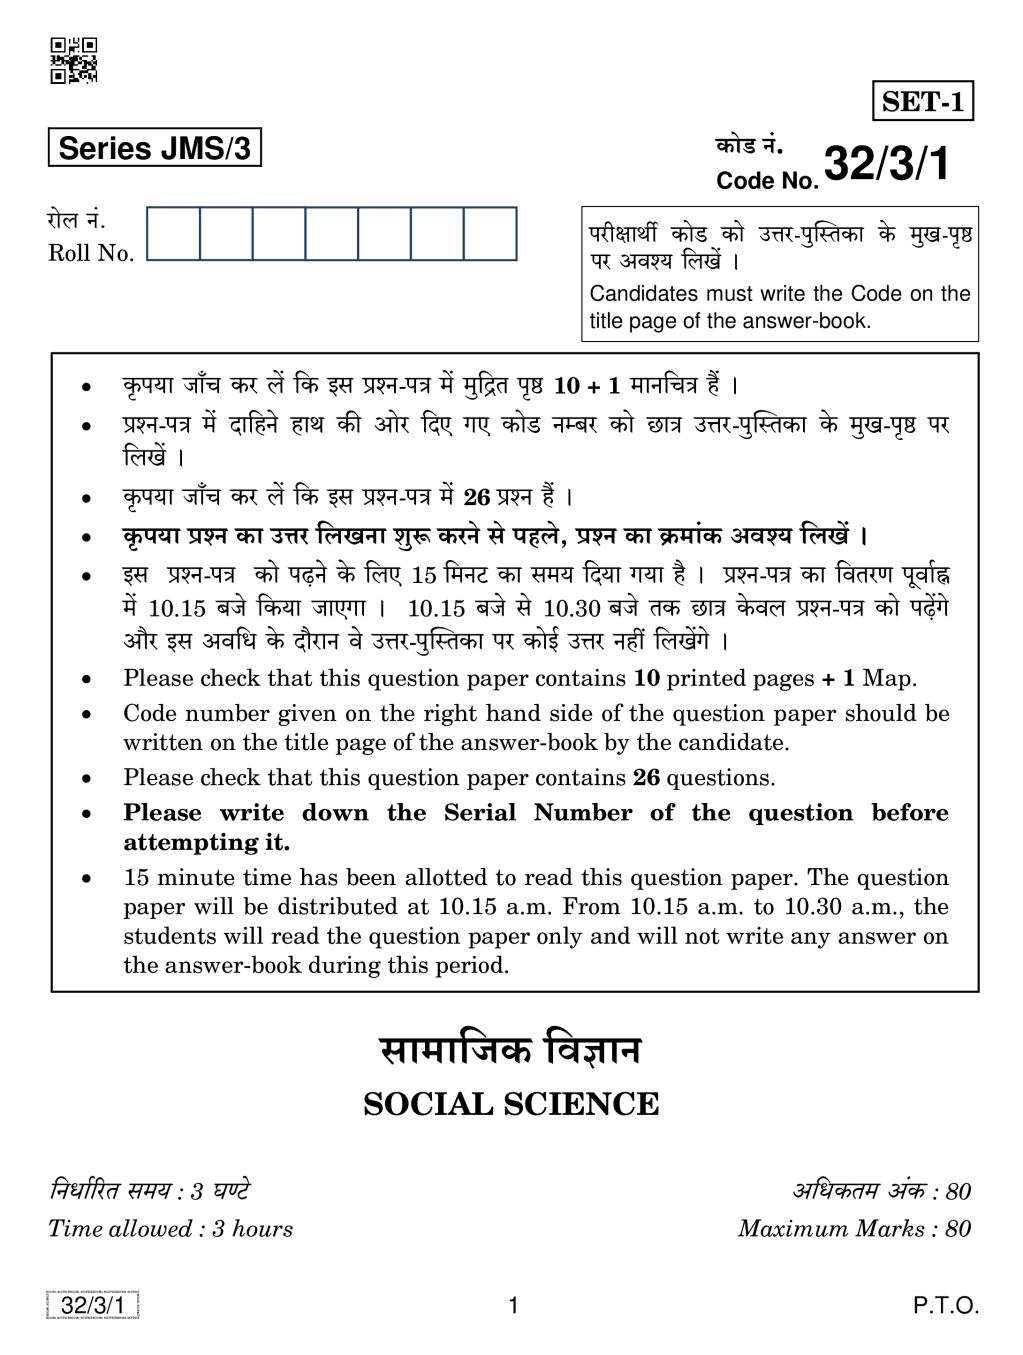 CBSE Class 10 Social Science Question Paper 2019 Set 3 - Page 1